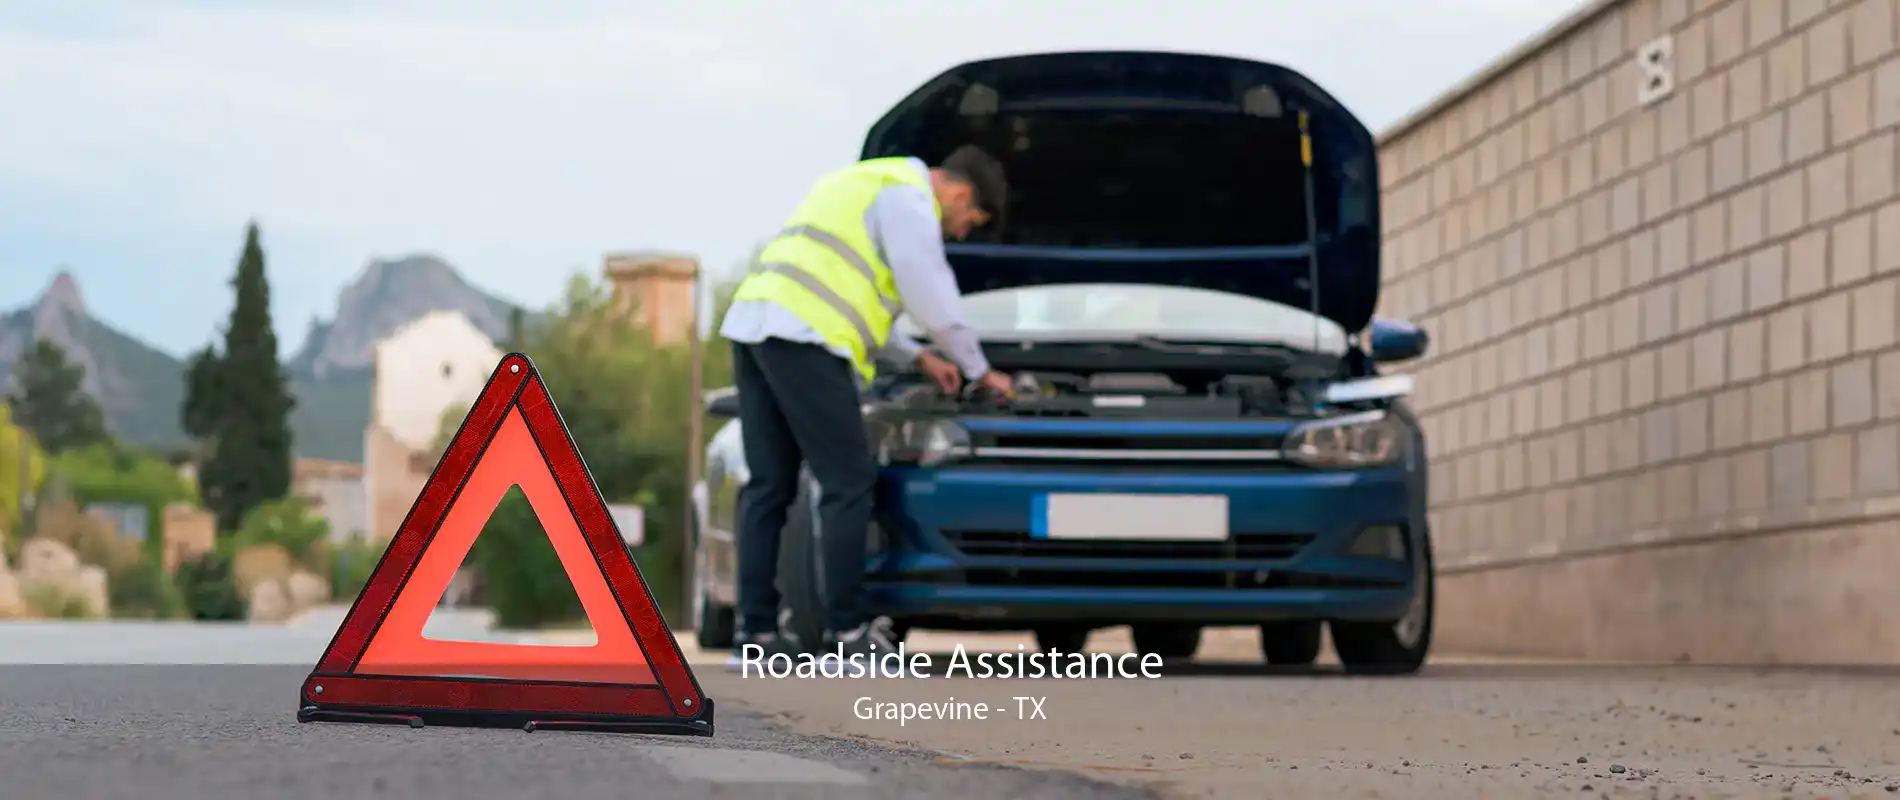 Roadside Assistance Grapevine - TX